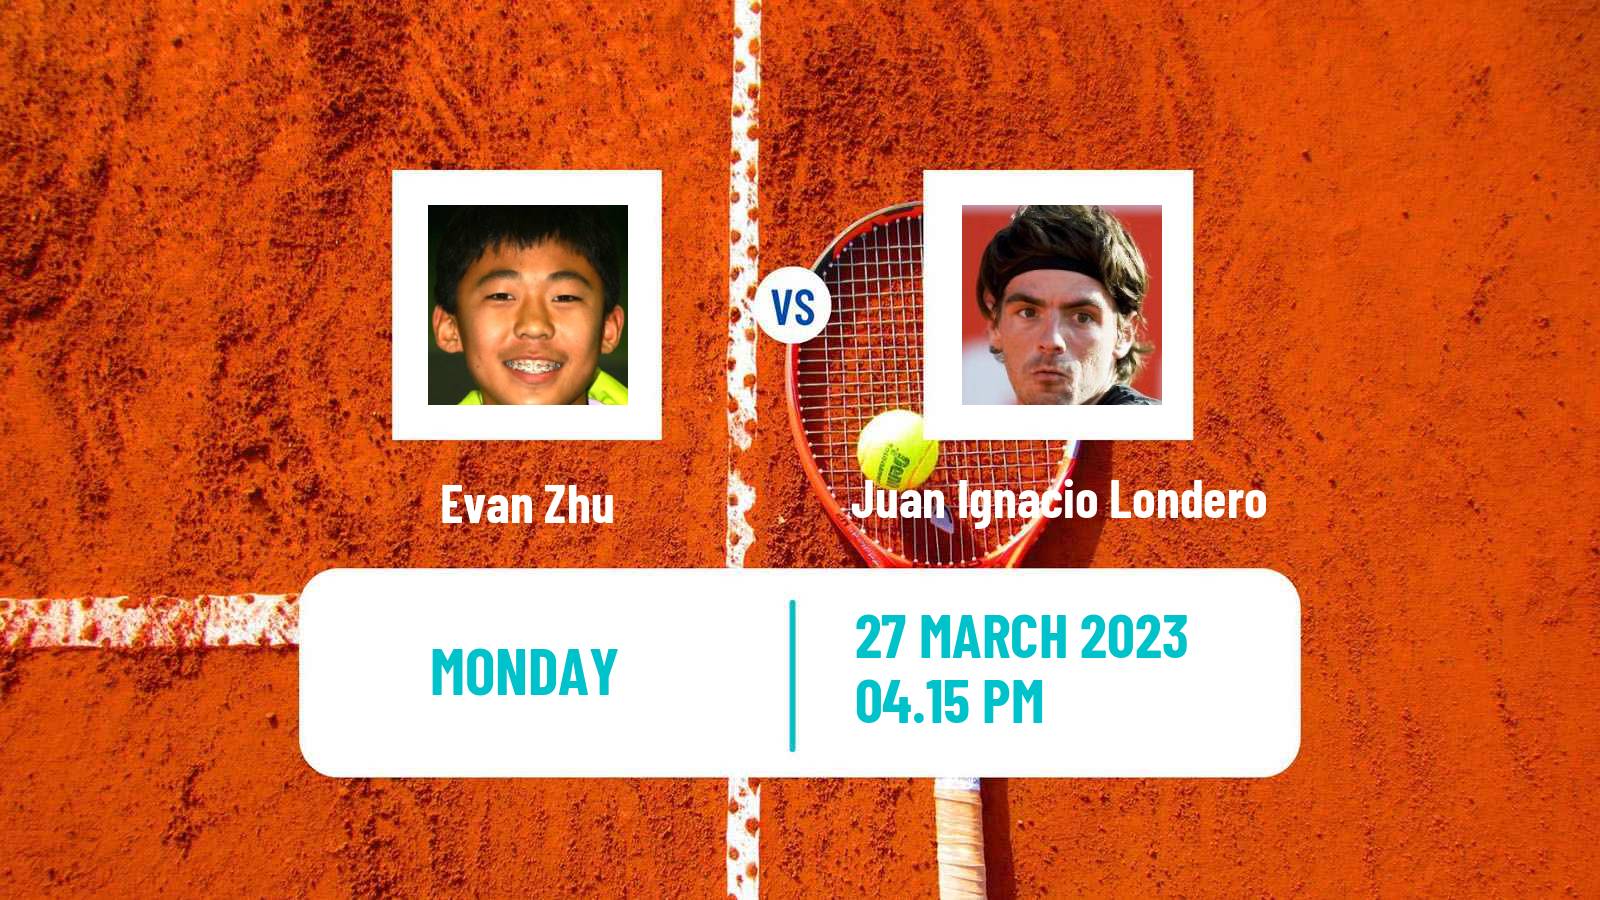 Tennis ATP Challenger Evan Zhu - Juan Ignacio Londero